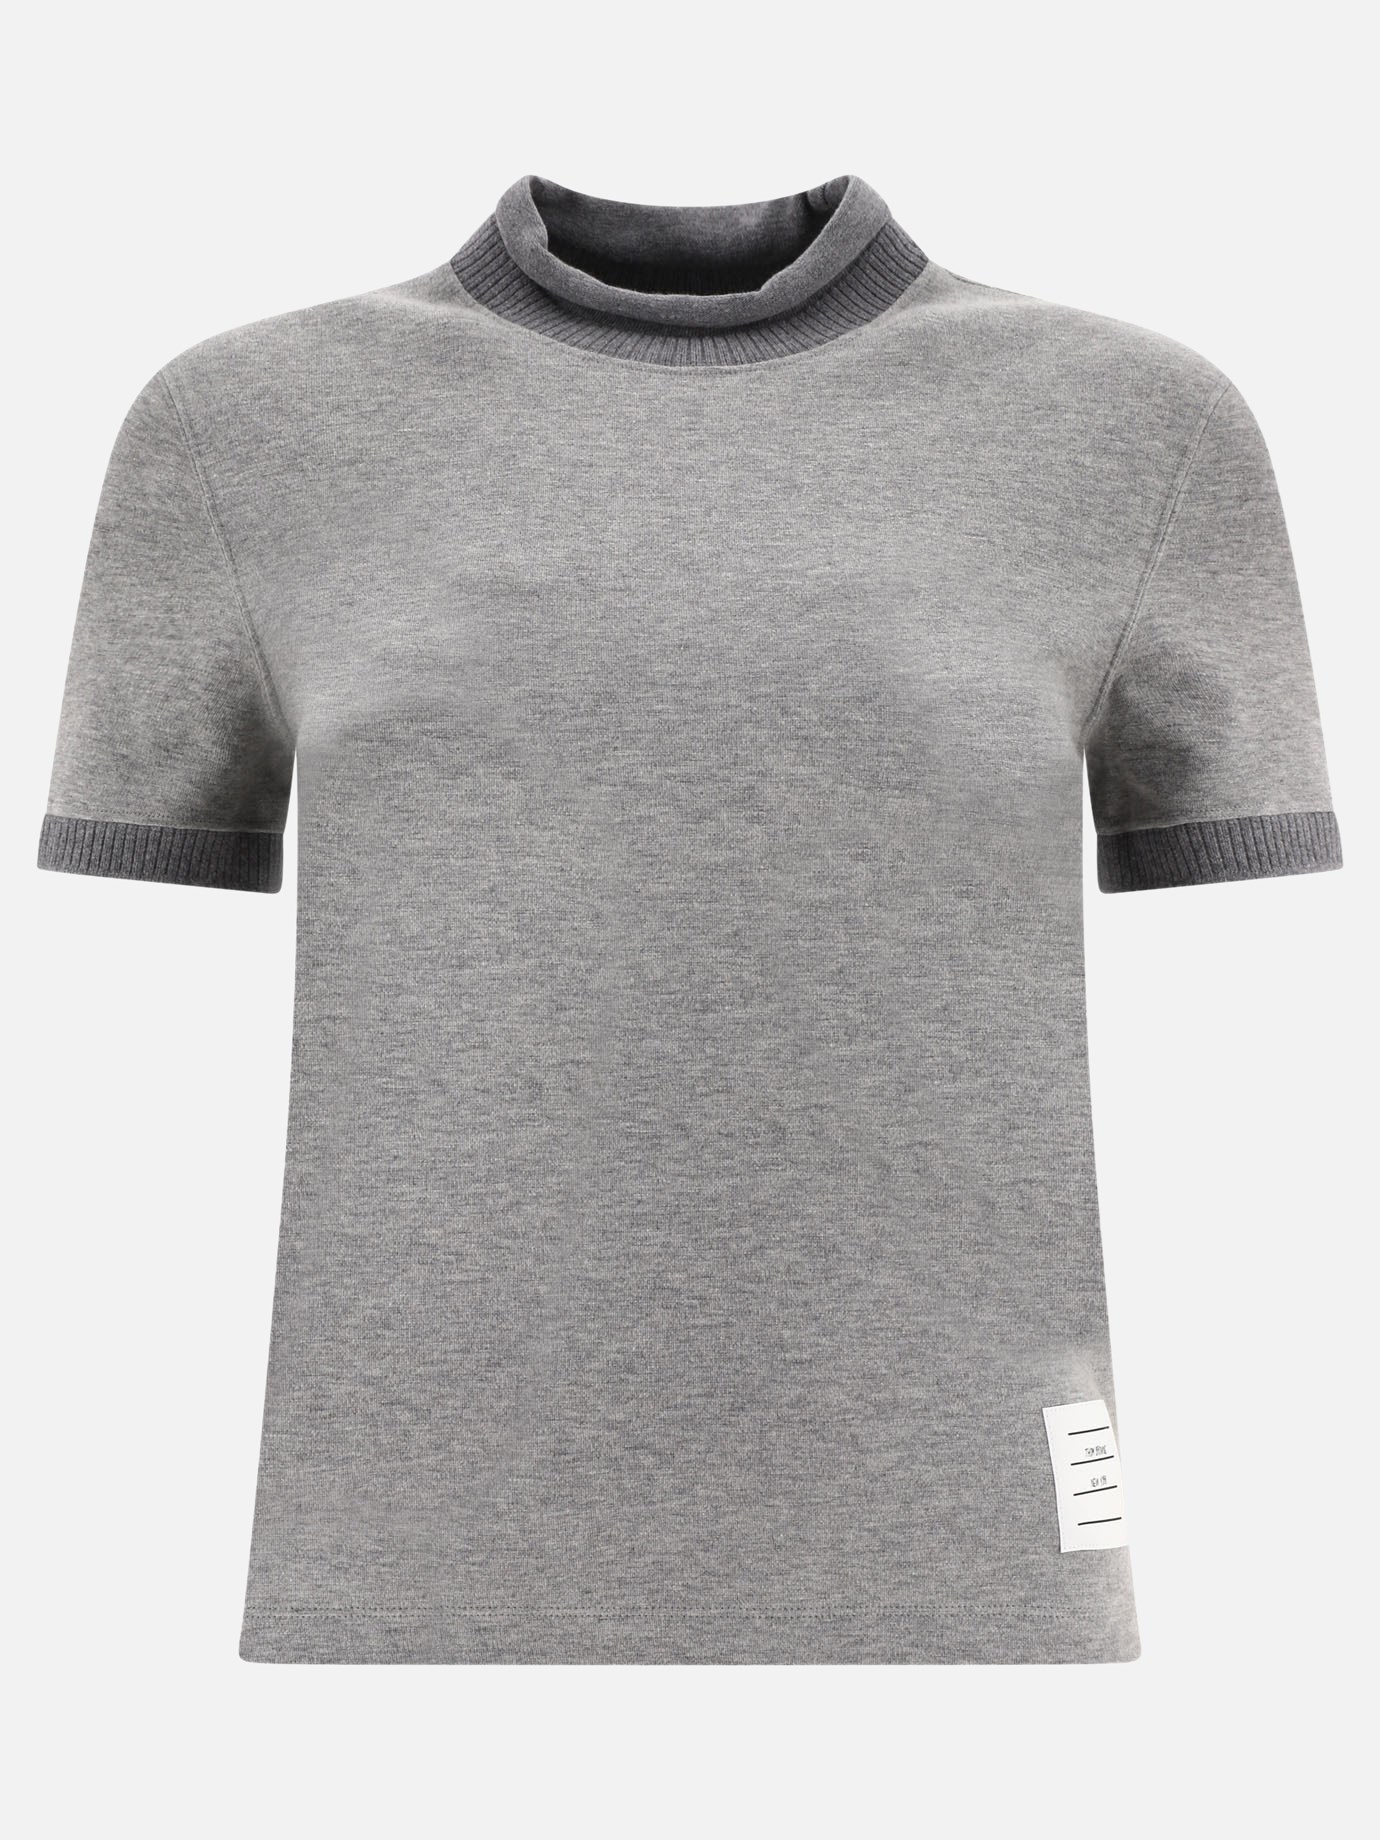  Ribbed-edge  t-shirtby Thom Browne - 3